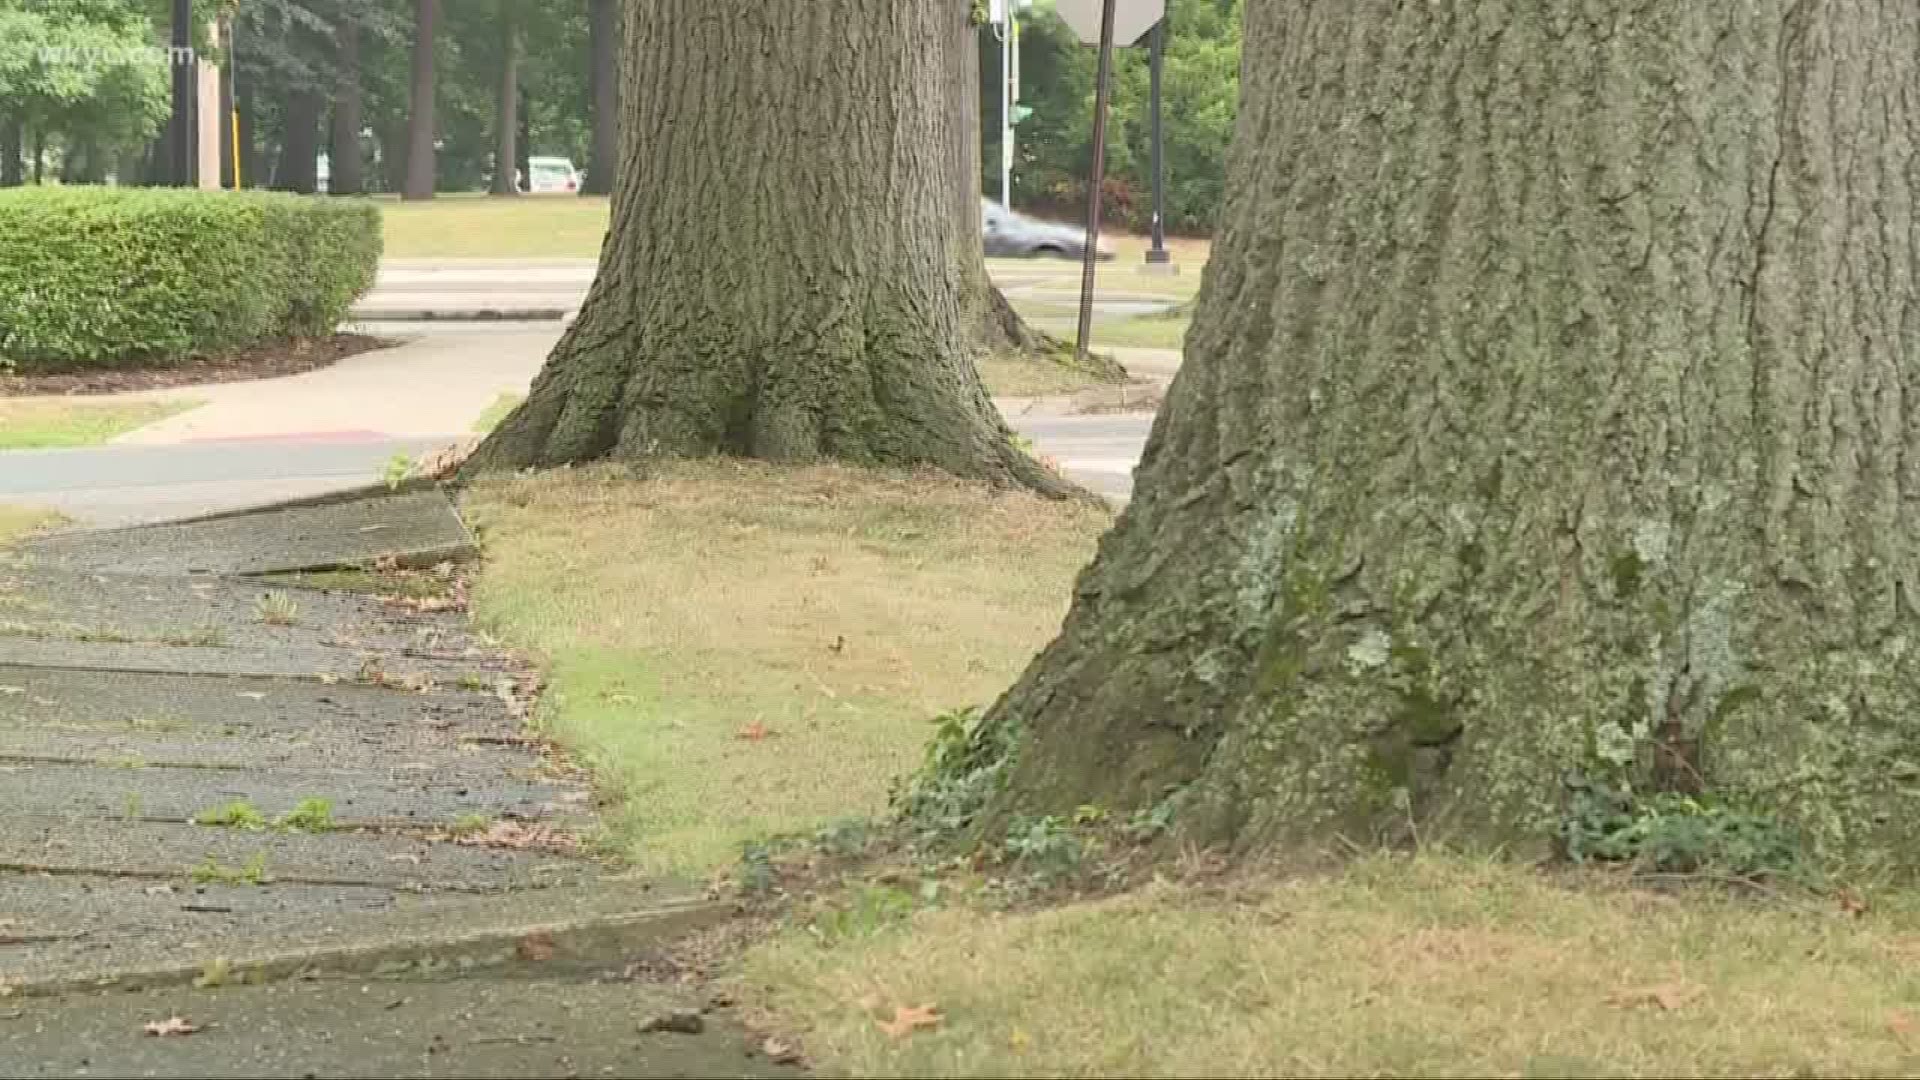 Fungal disease is damaging Oak Trees across Northeast Ohio